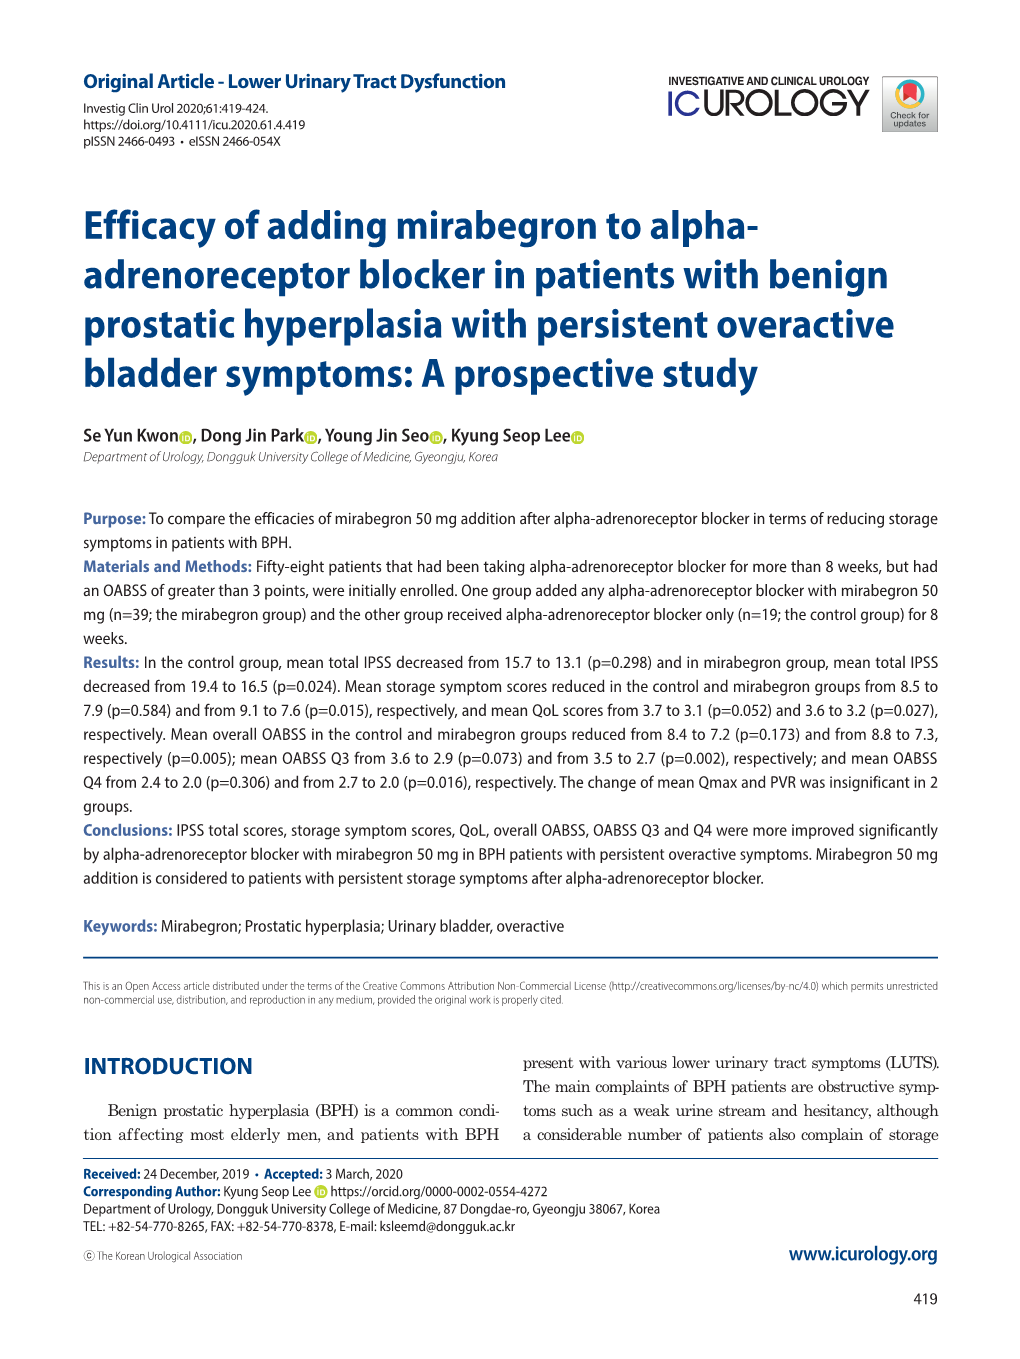 Adrenoreceptor Blocker in Patients with Benign Prostatic Hyperplasia with Persistent Overactive Bladder Symptoms: a Prospective Study